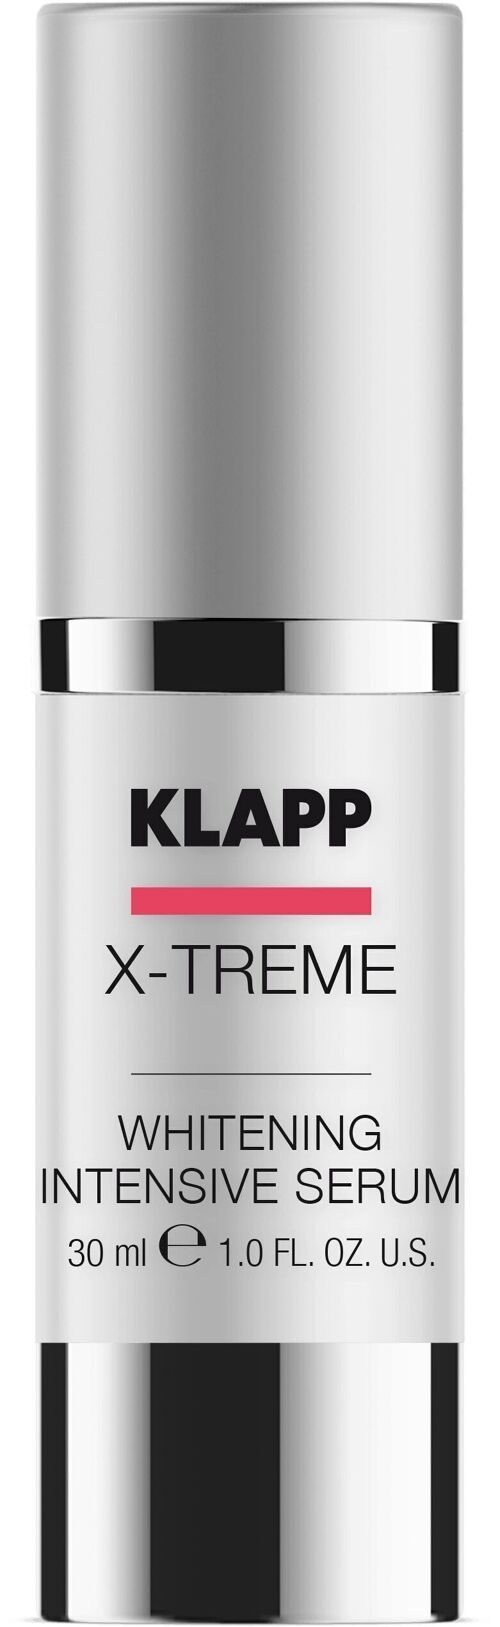 X-TREME Serum Whitening Intensive 30ml